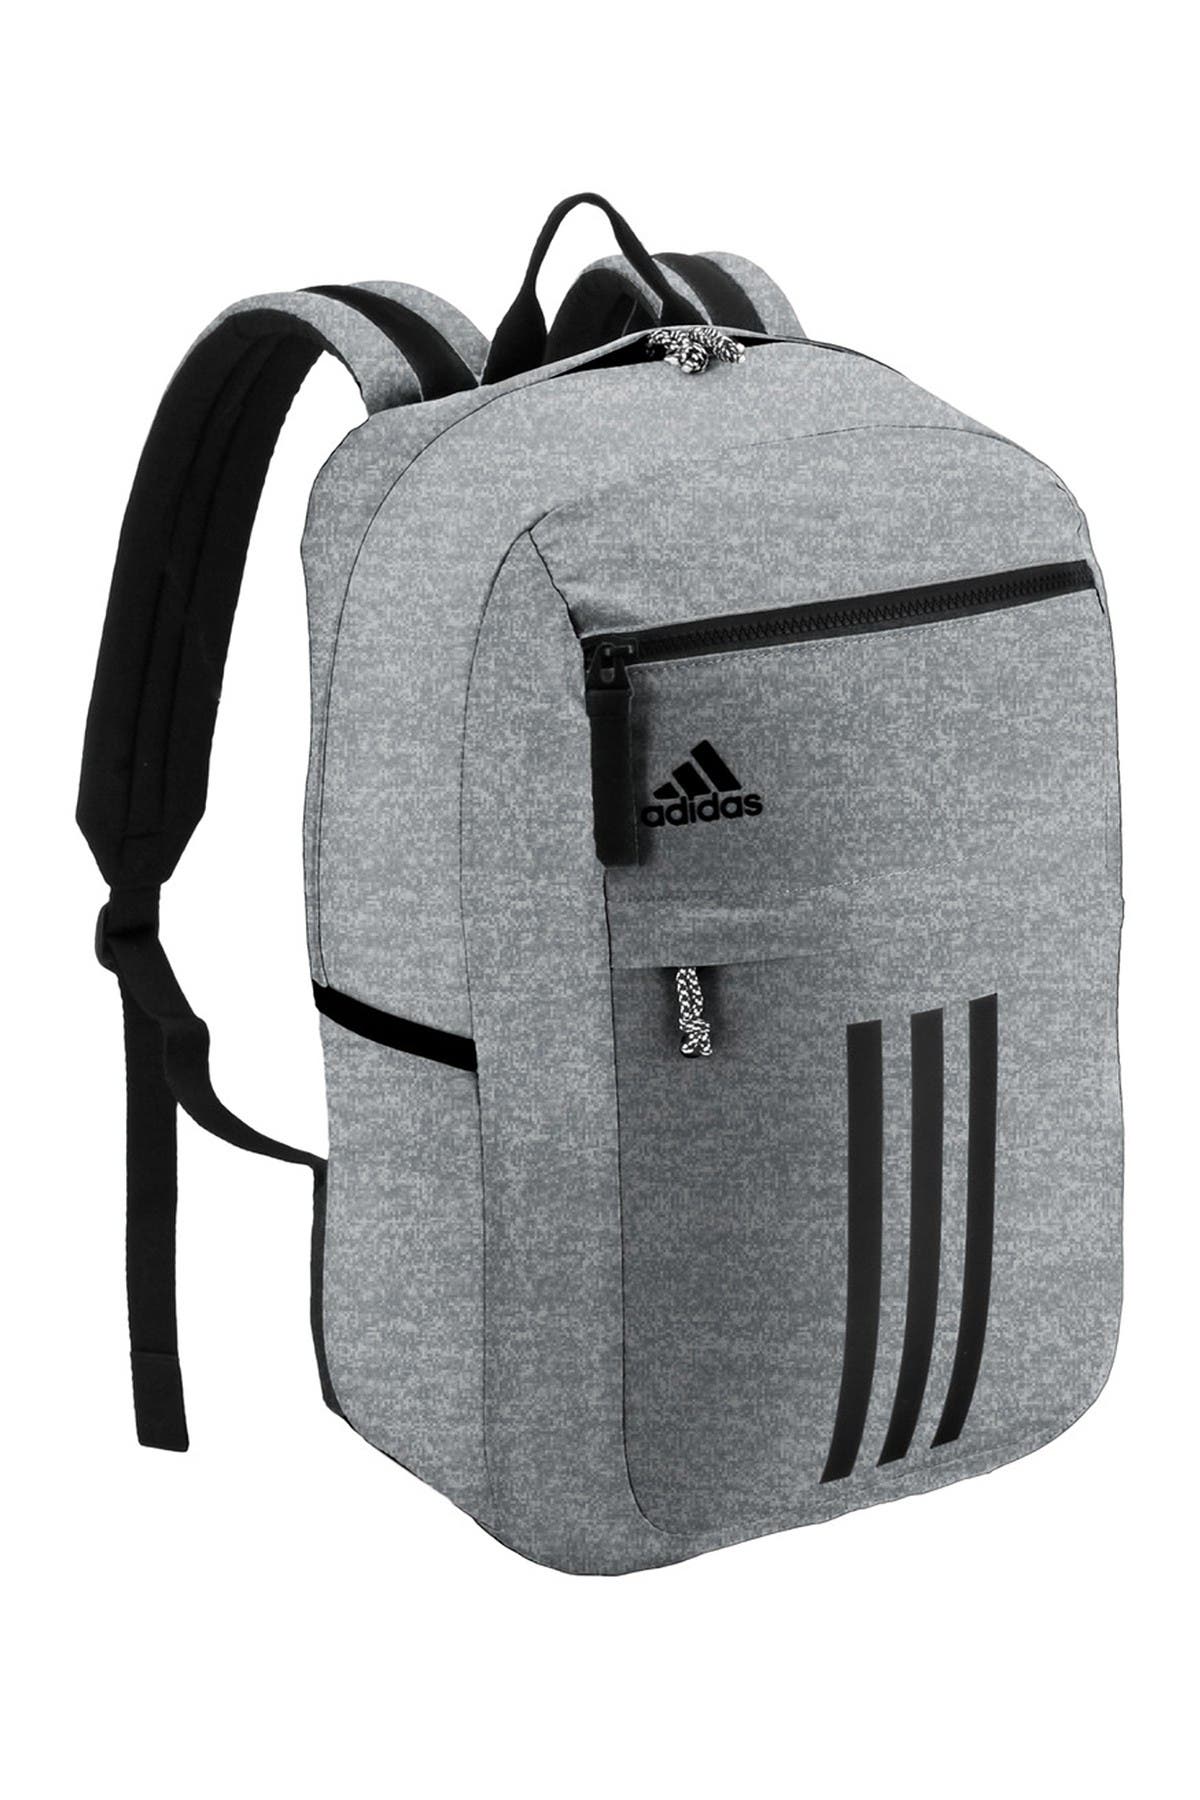 adidas backpack nordstrom